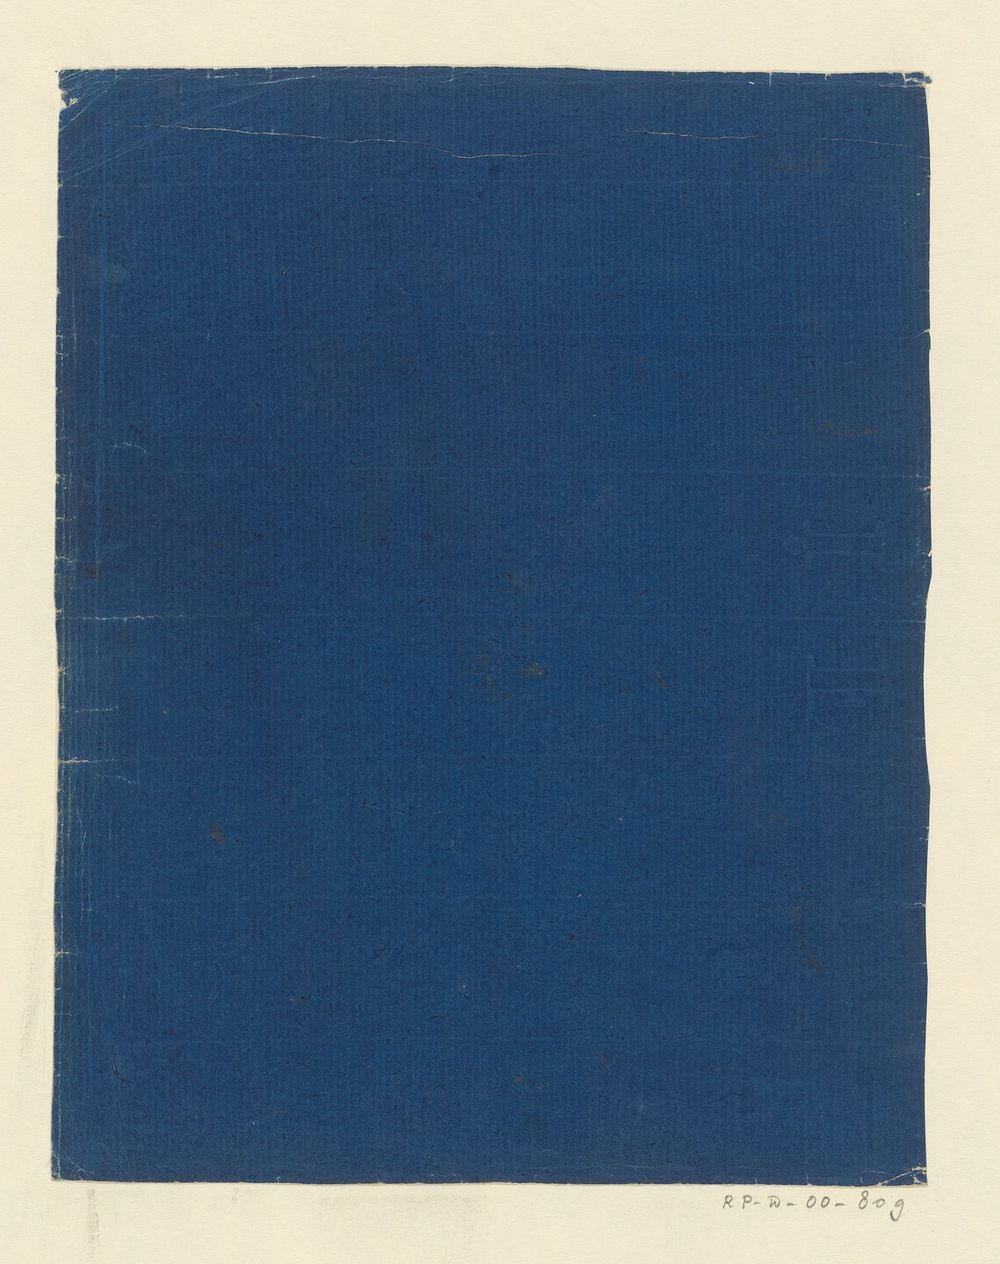 Effen blauw papier (1800 - 1900) by anonymous